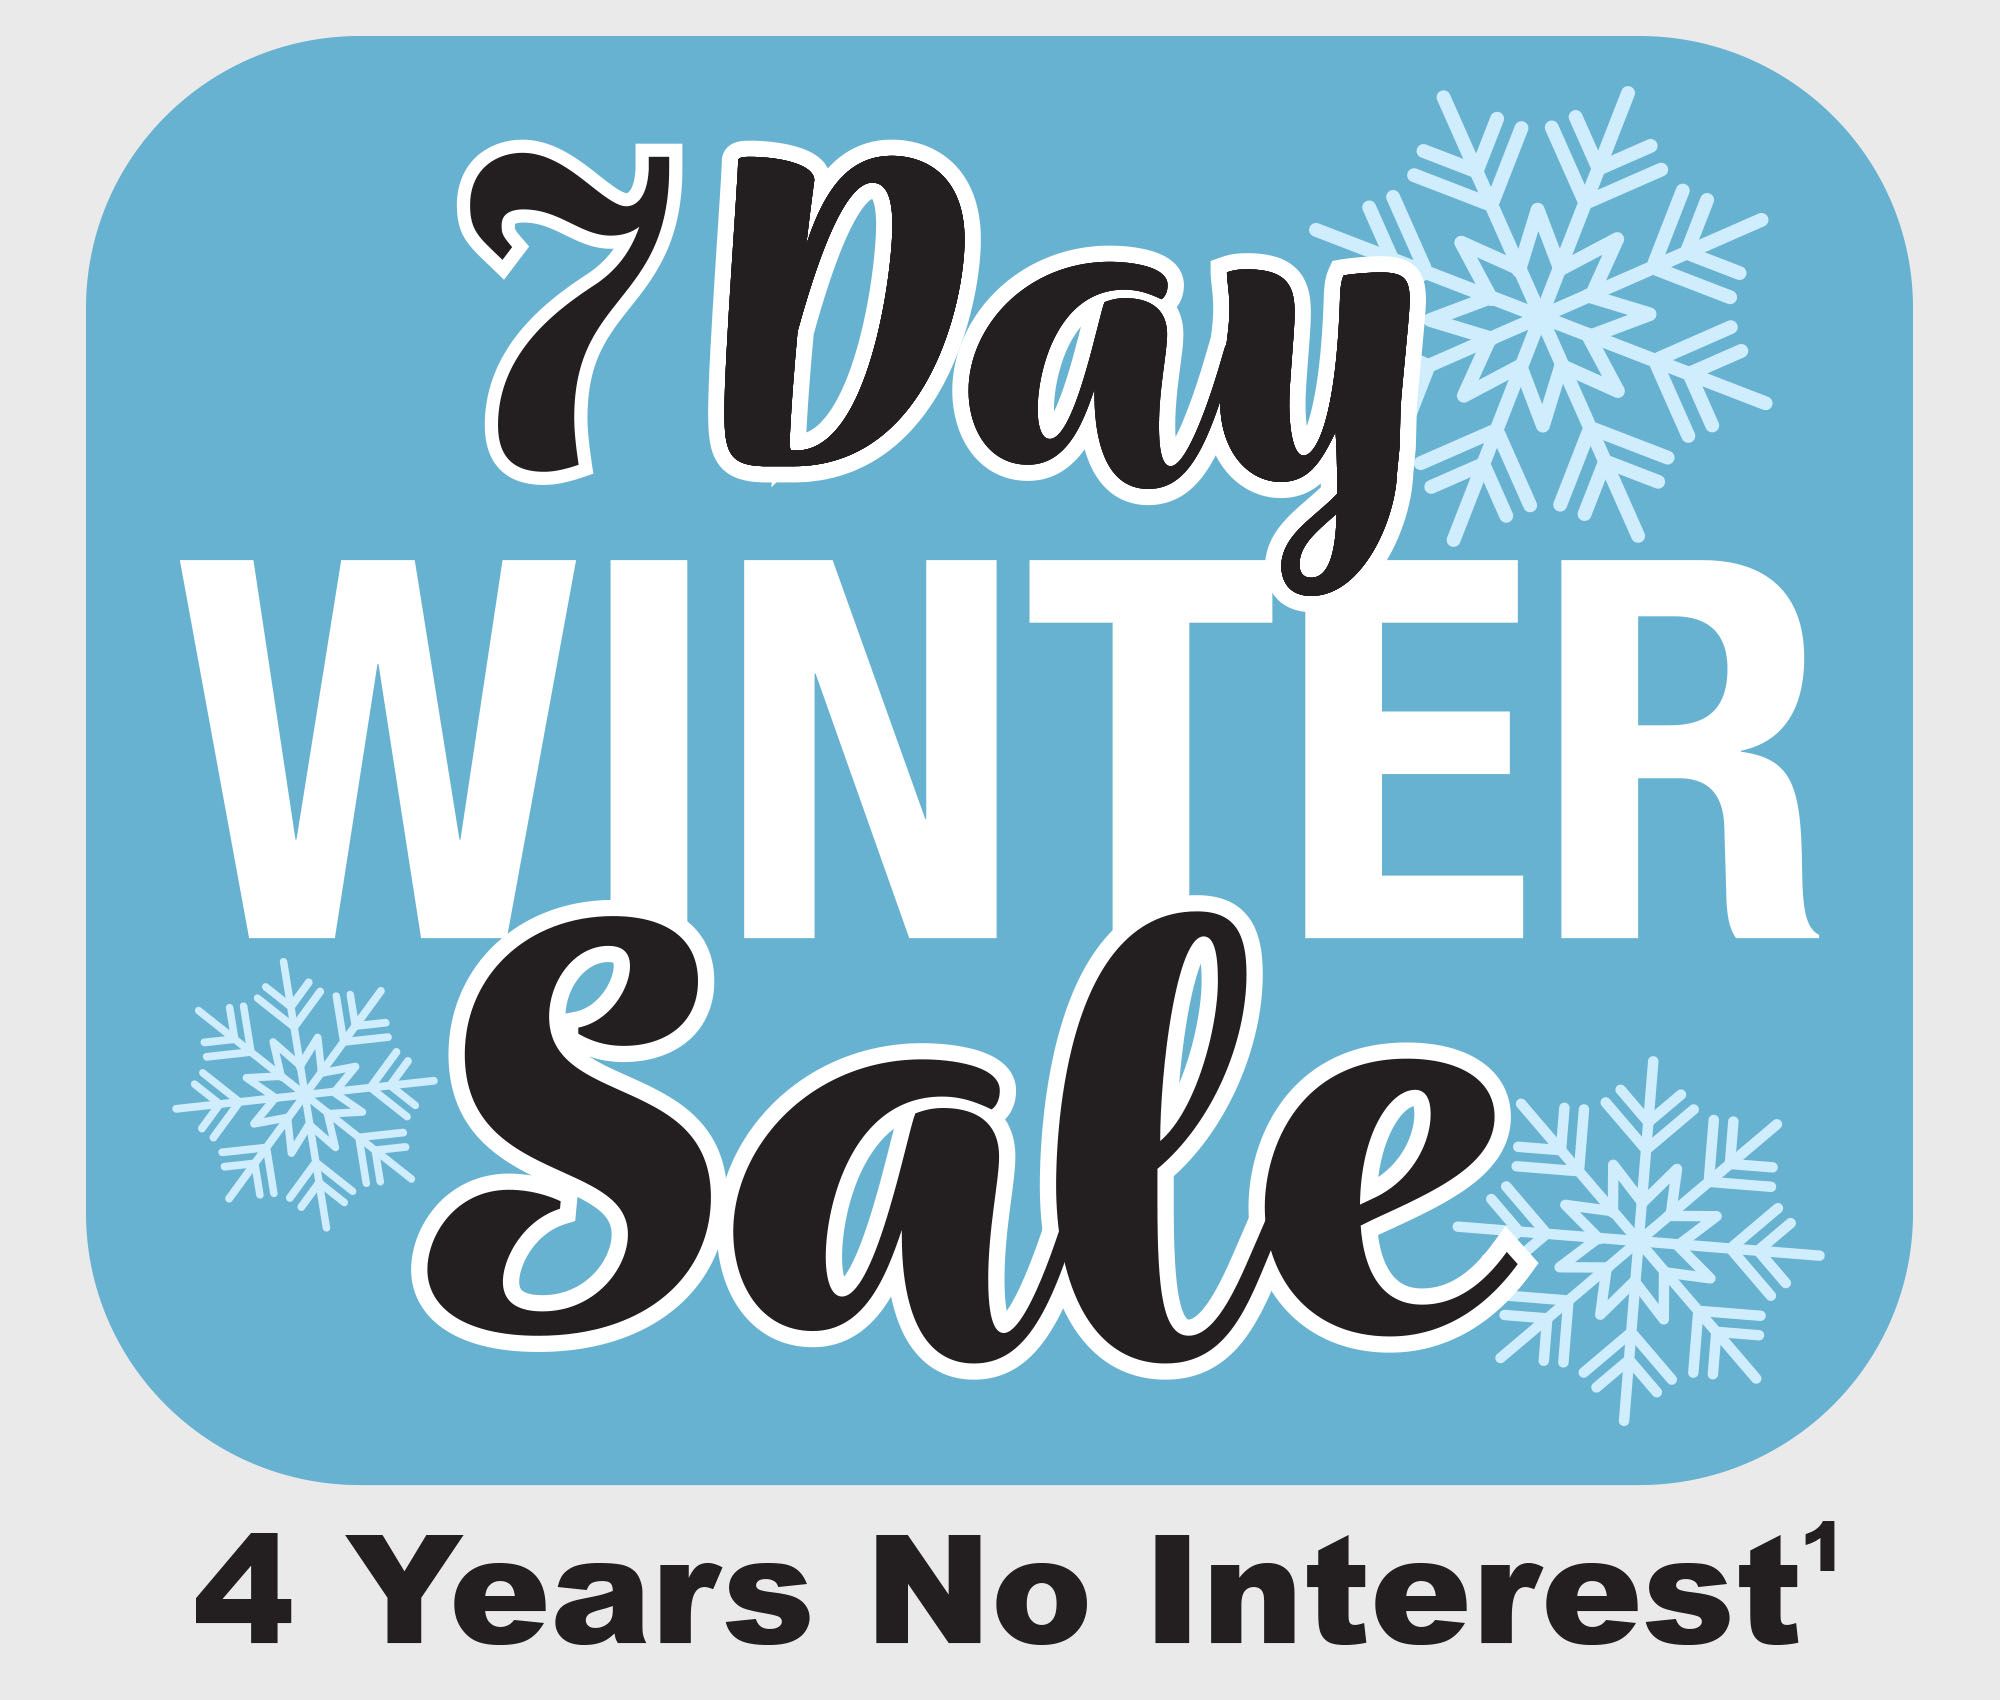 7 Day Winter Sale